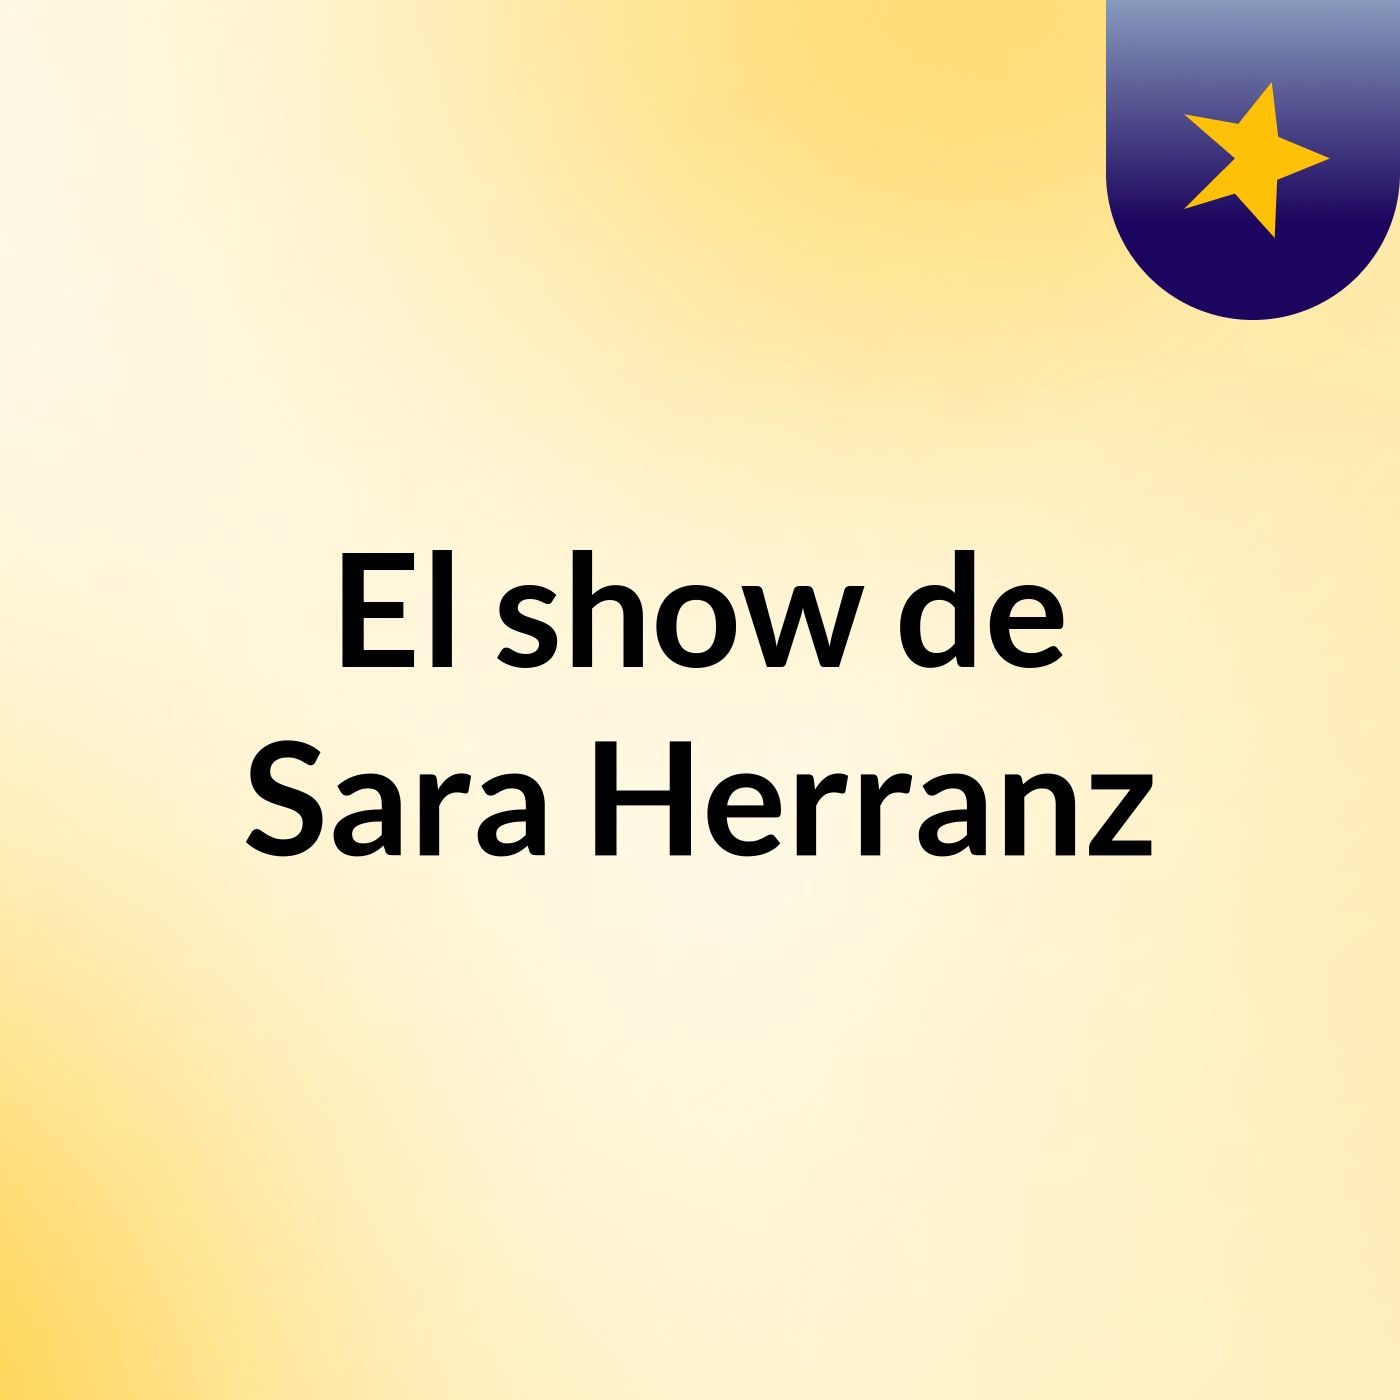 El show de Sara Herranz